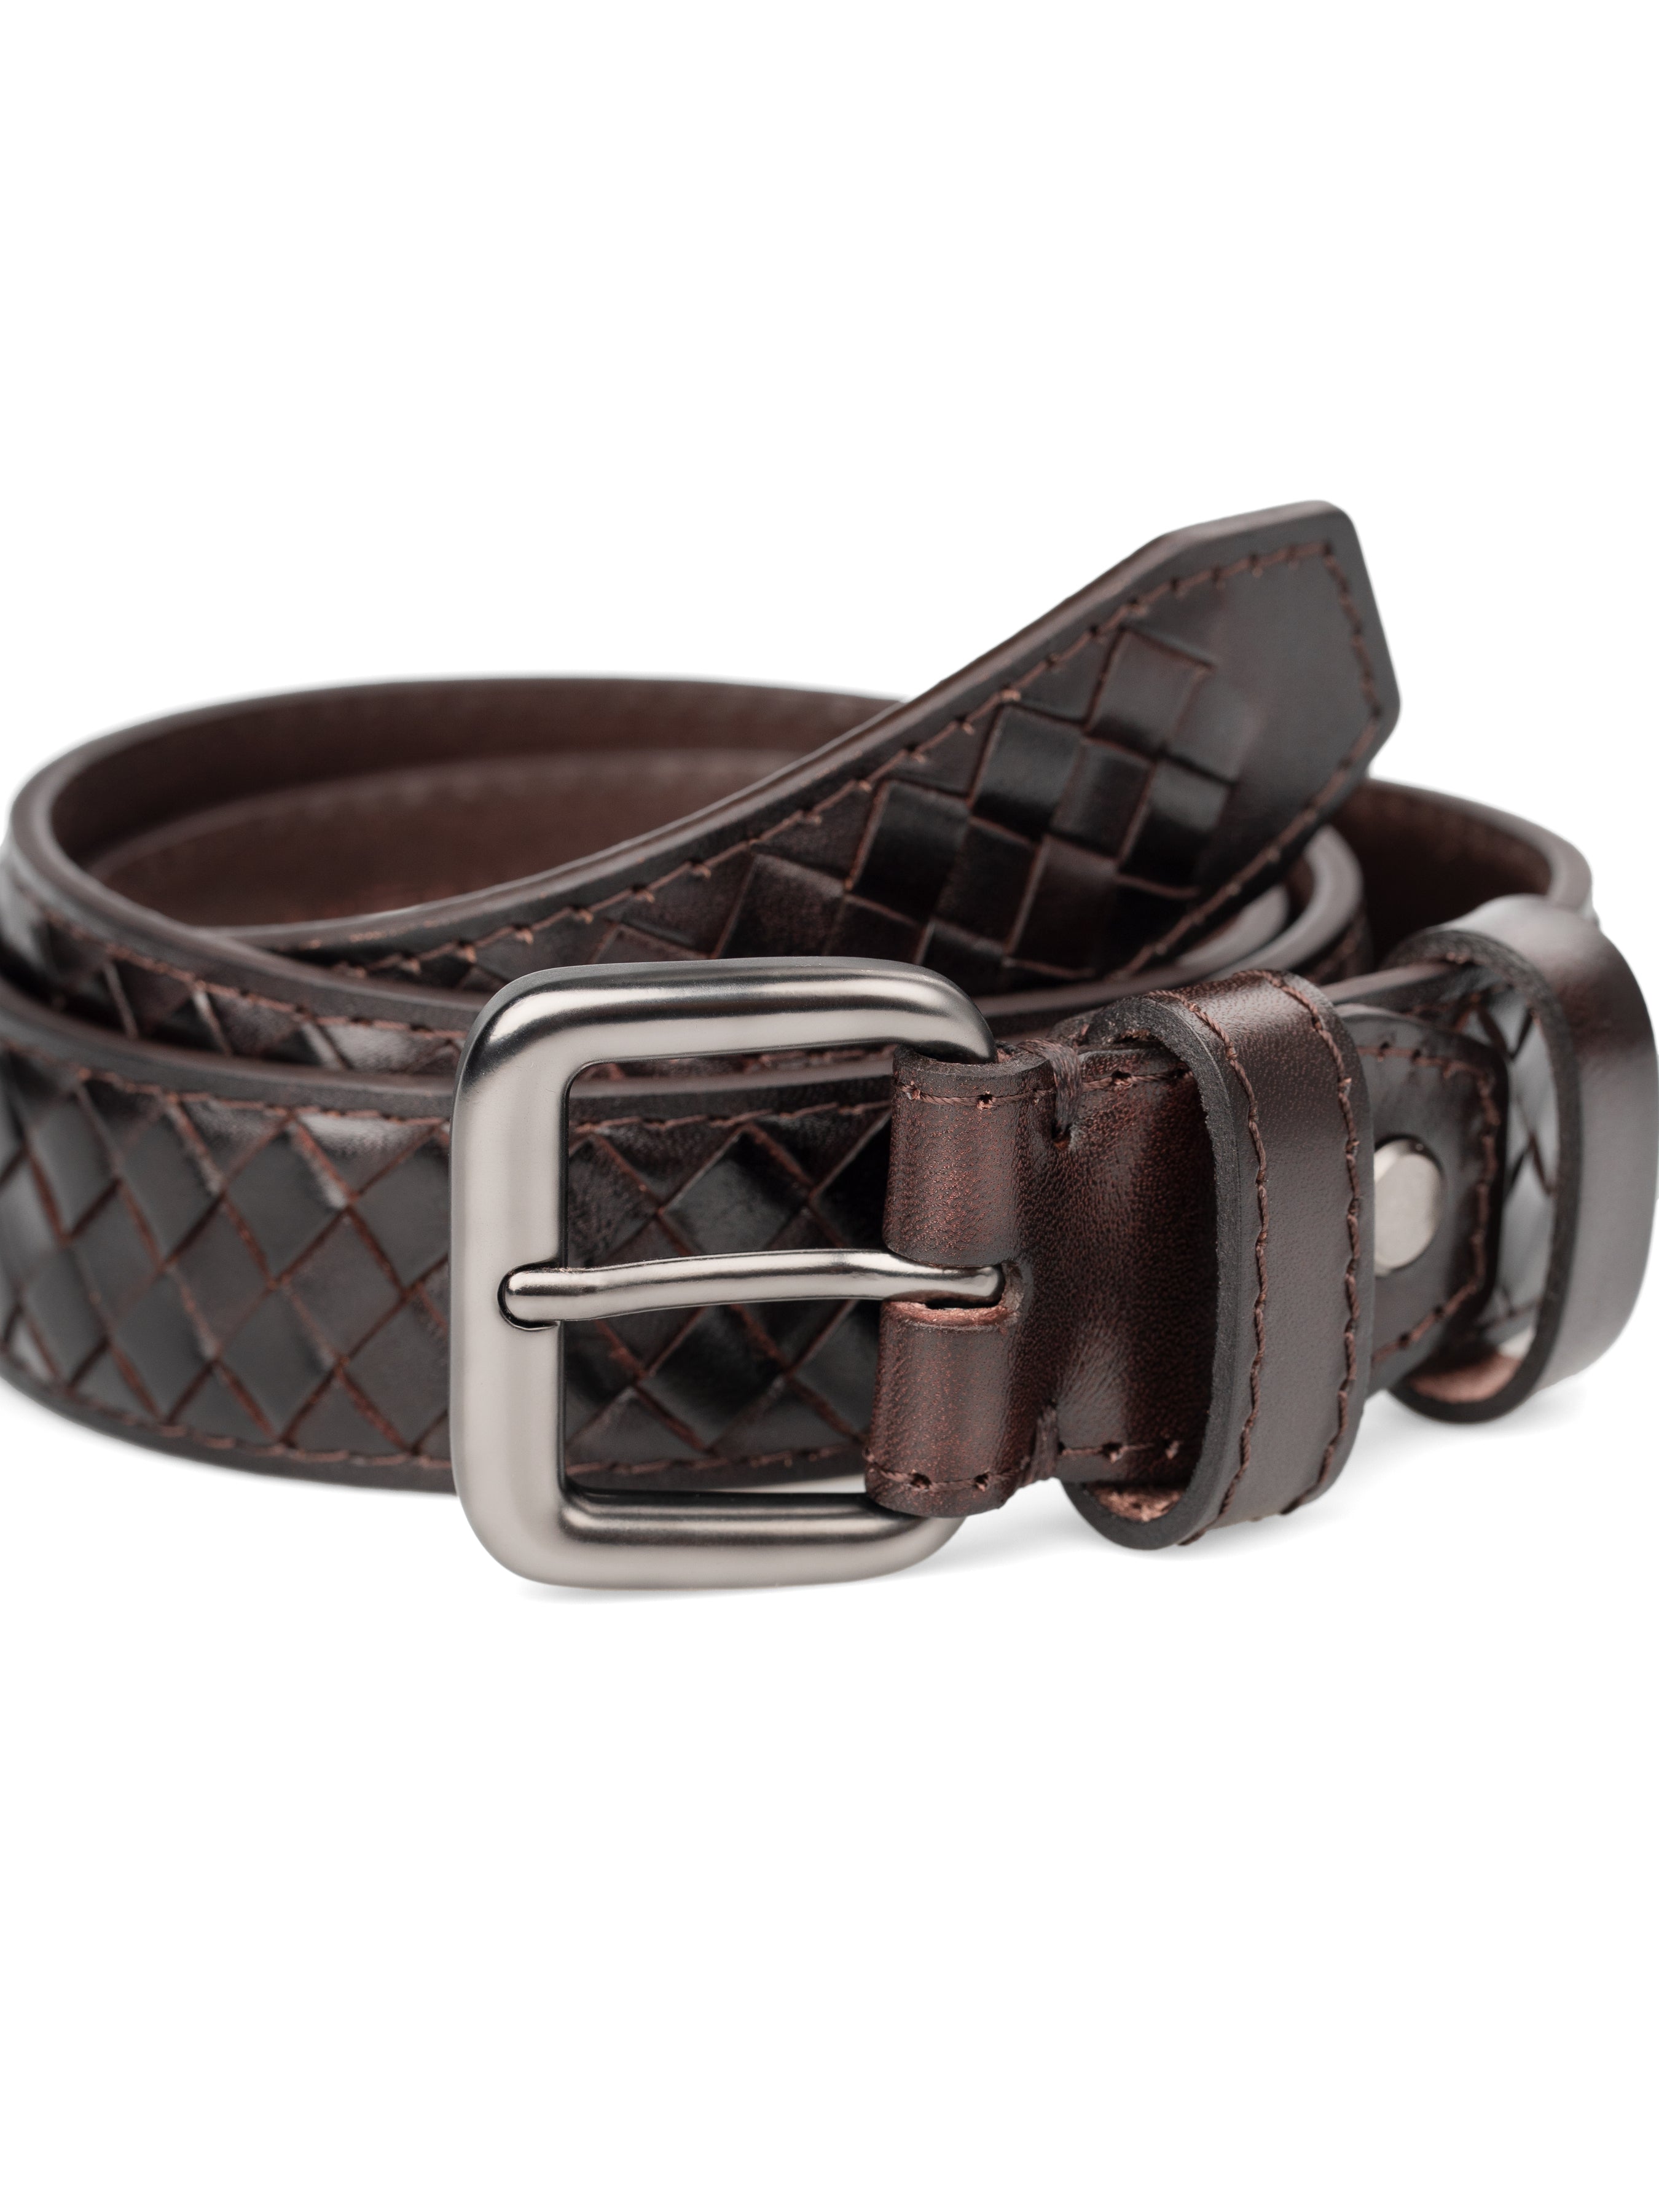 Woven Leather Belt - Black Gunmetal Buckle